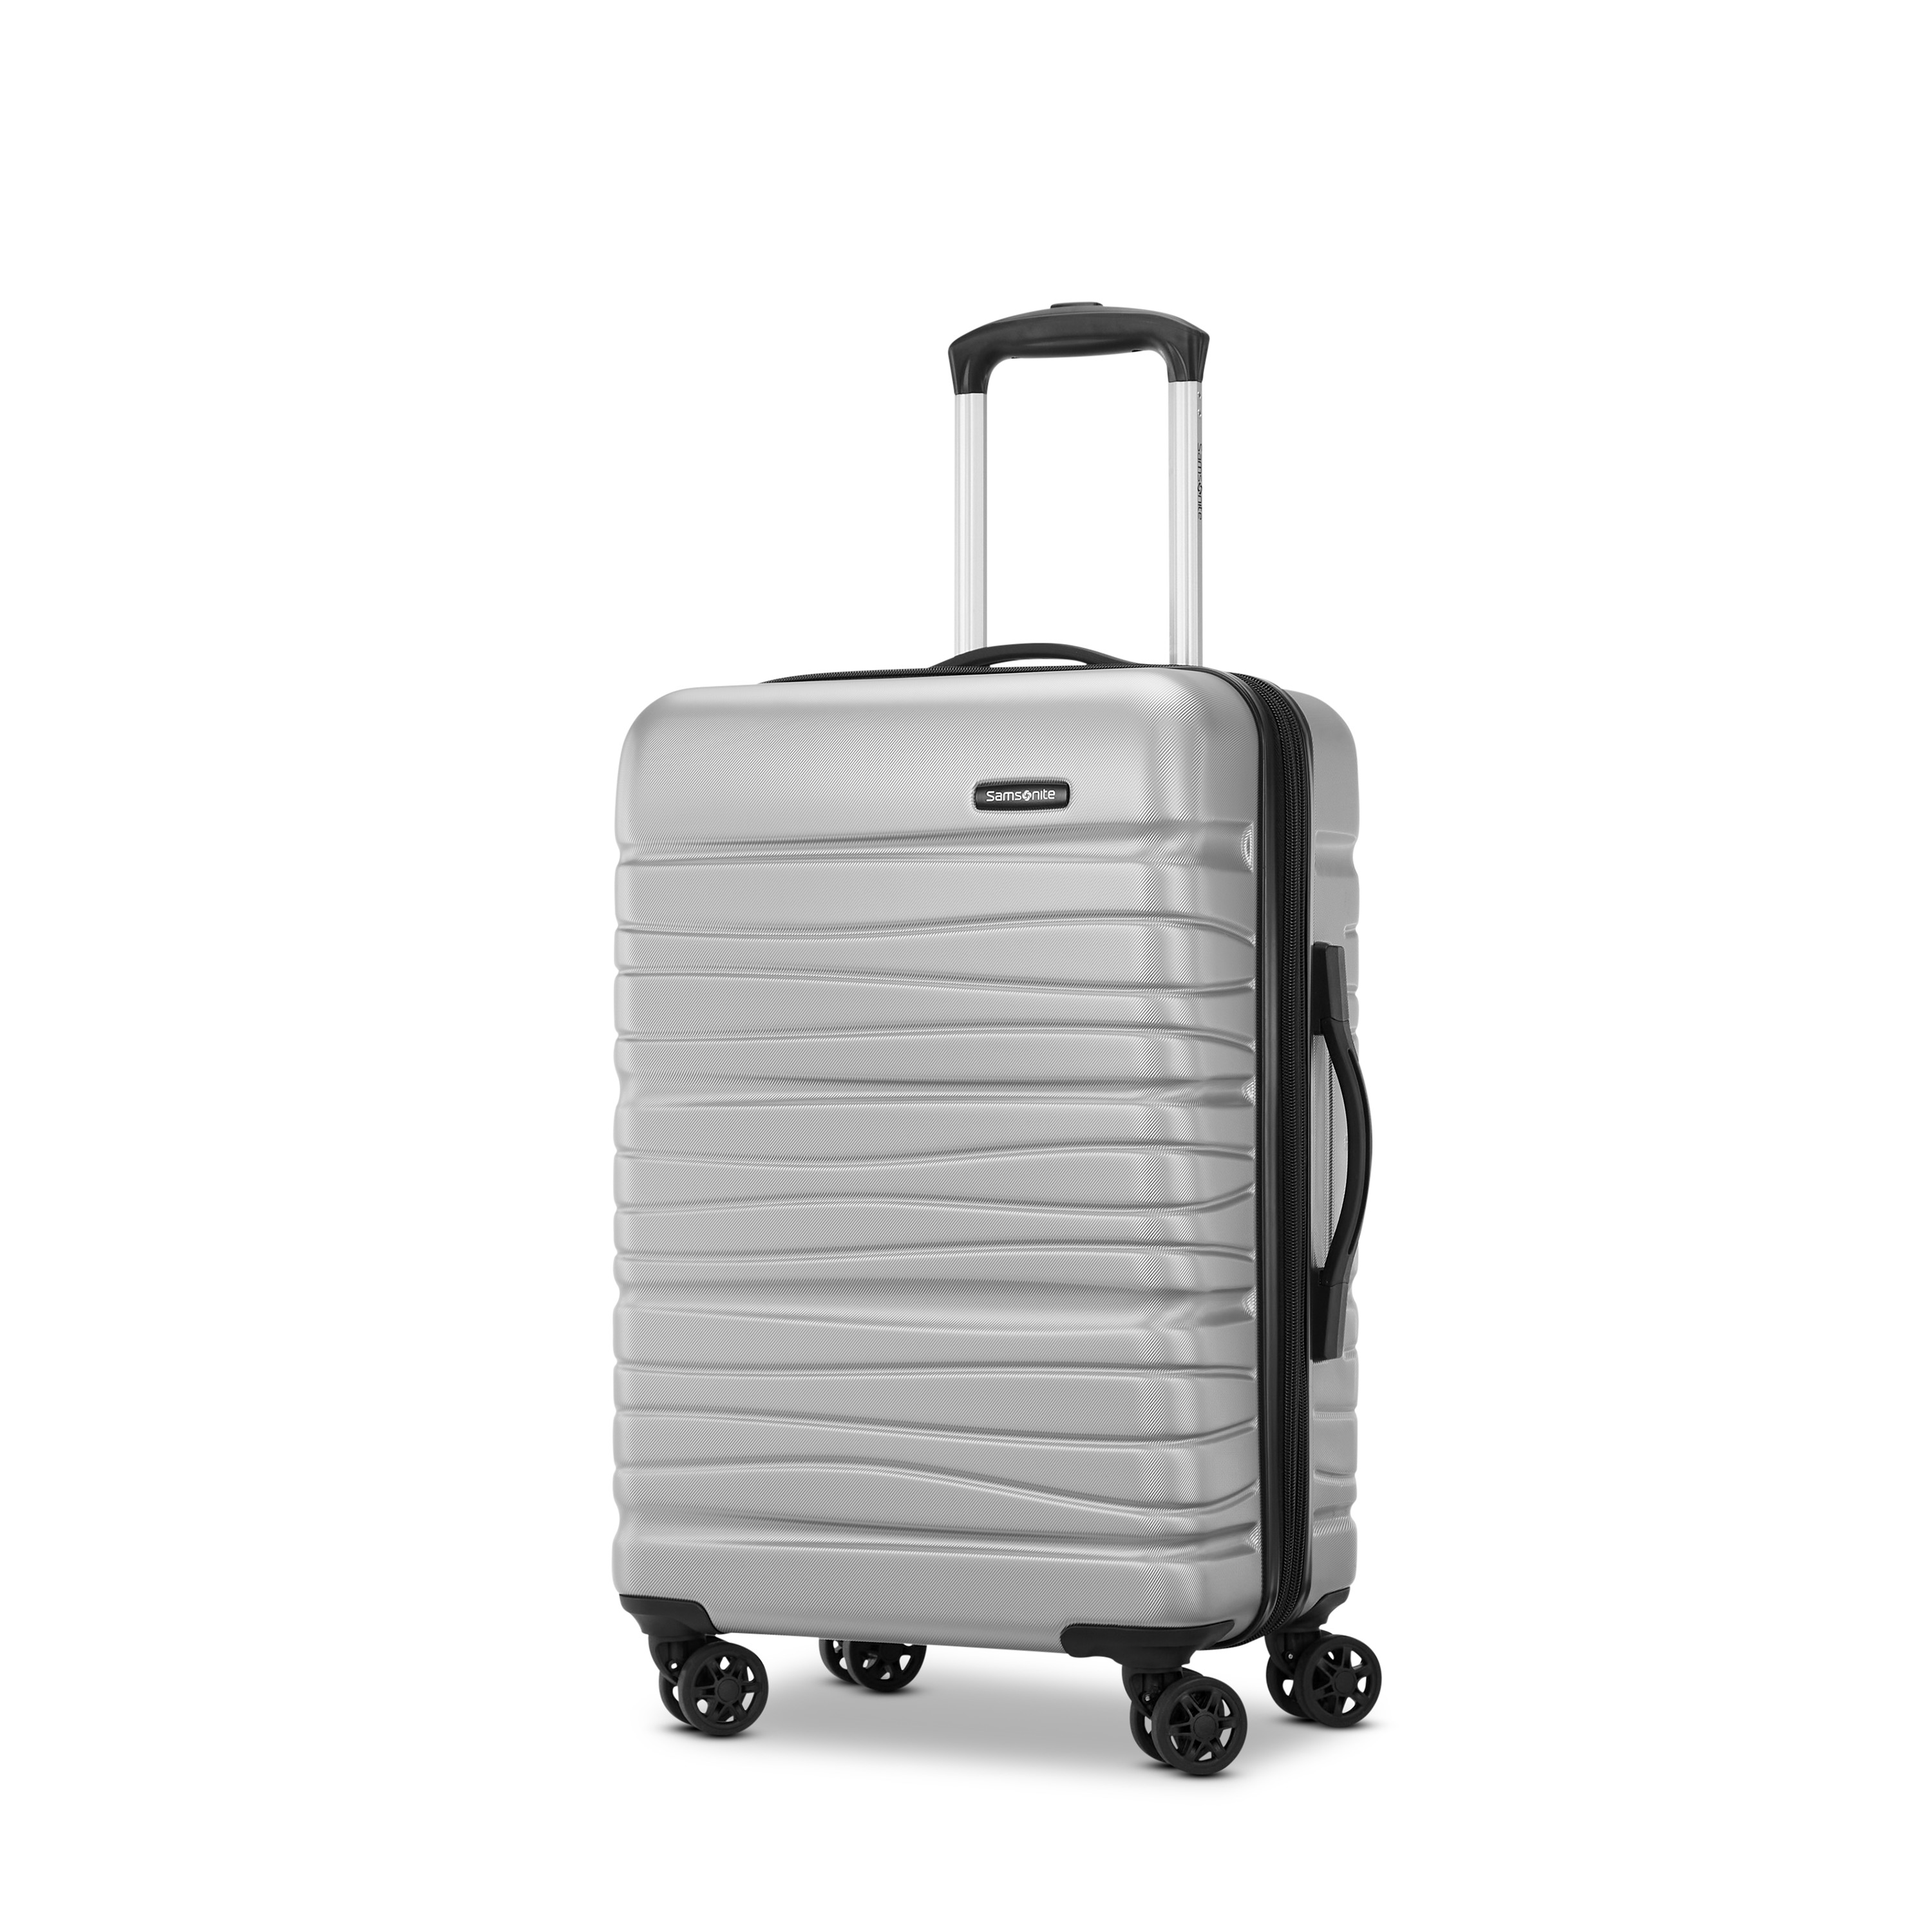 Samsonite Carry-On: Durable Hardside Travel Luggage